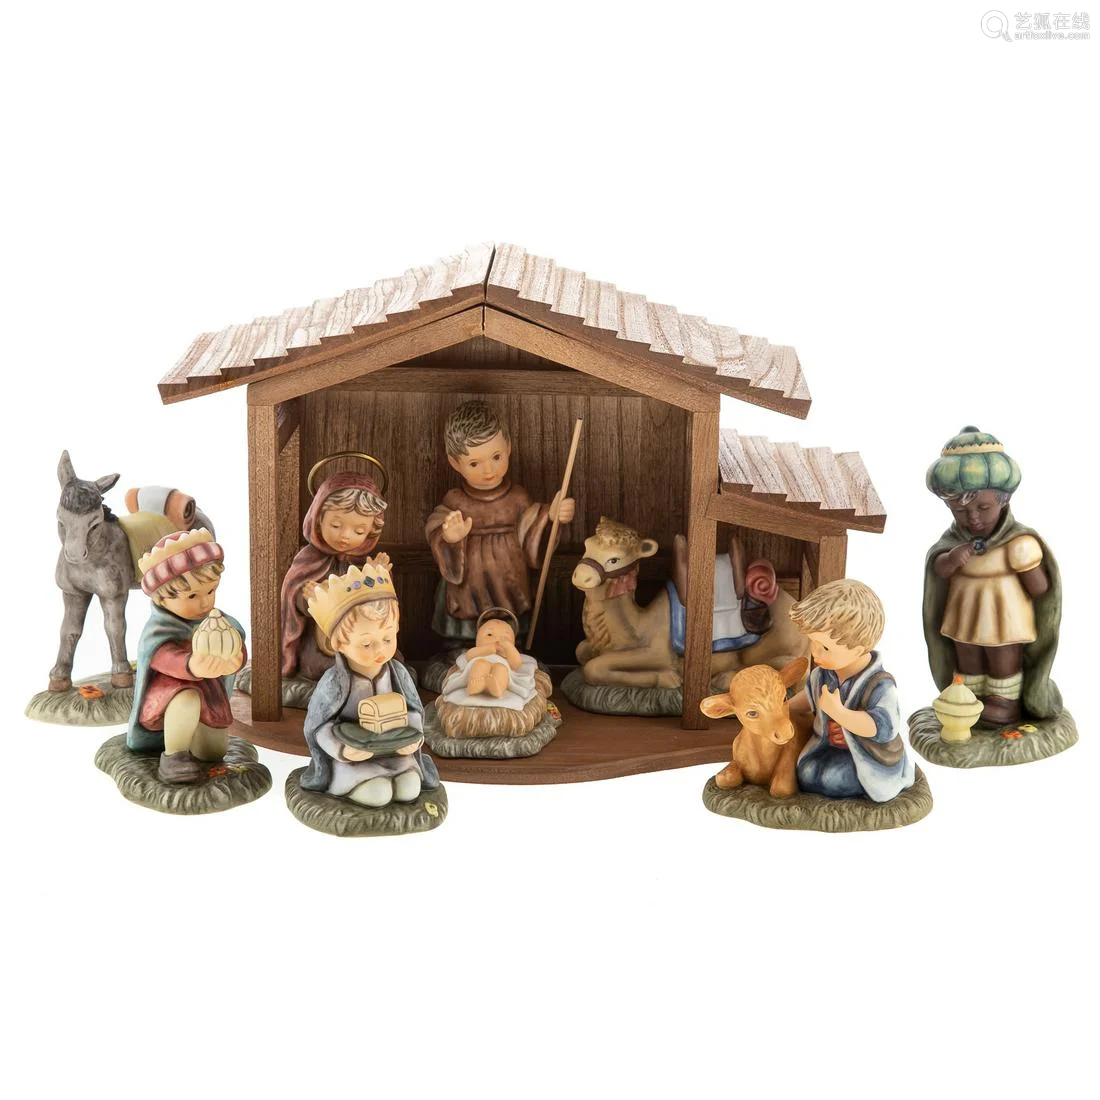 نظيفة hummel nativity figurines - oregonpaternityproject.org